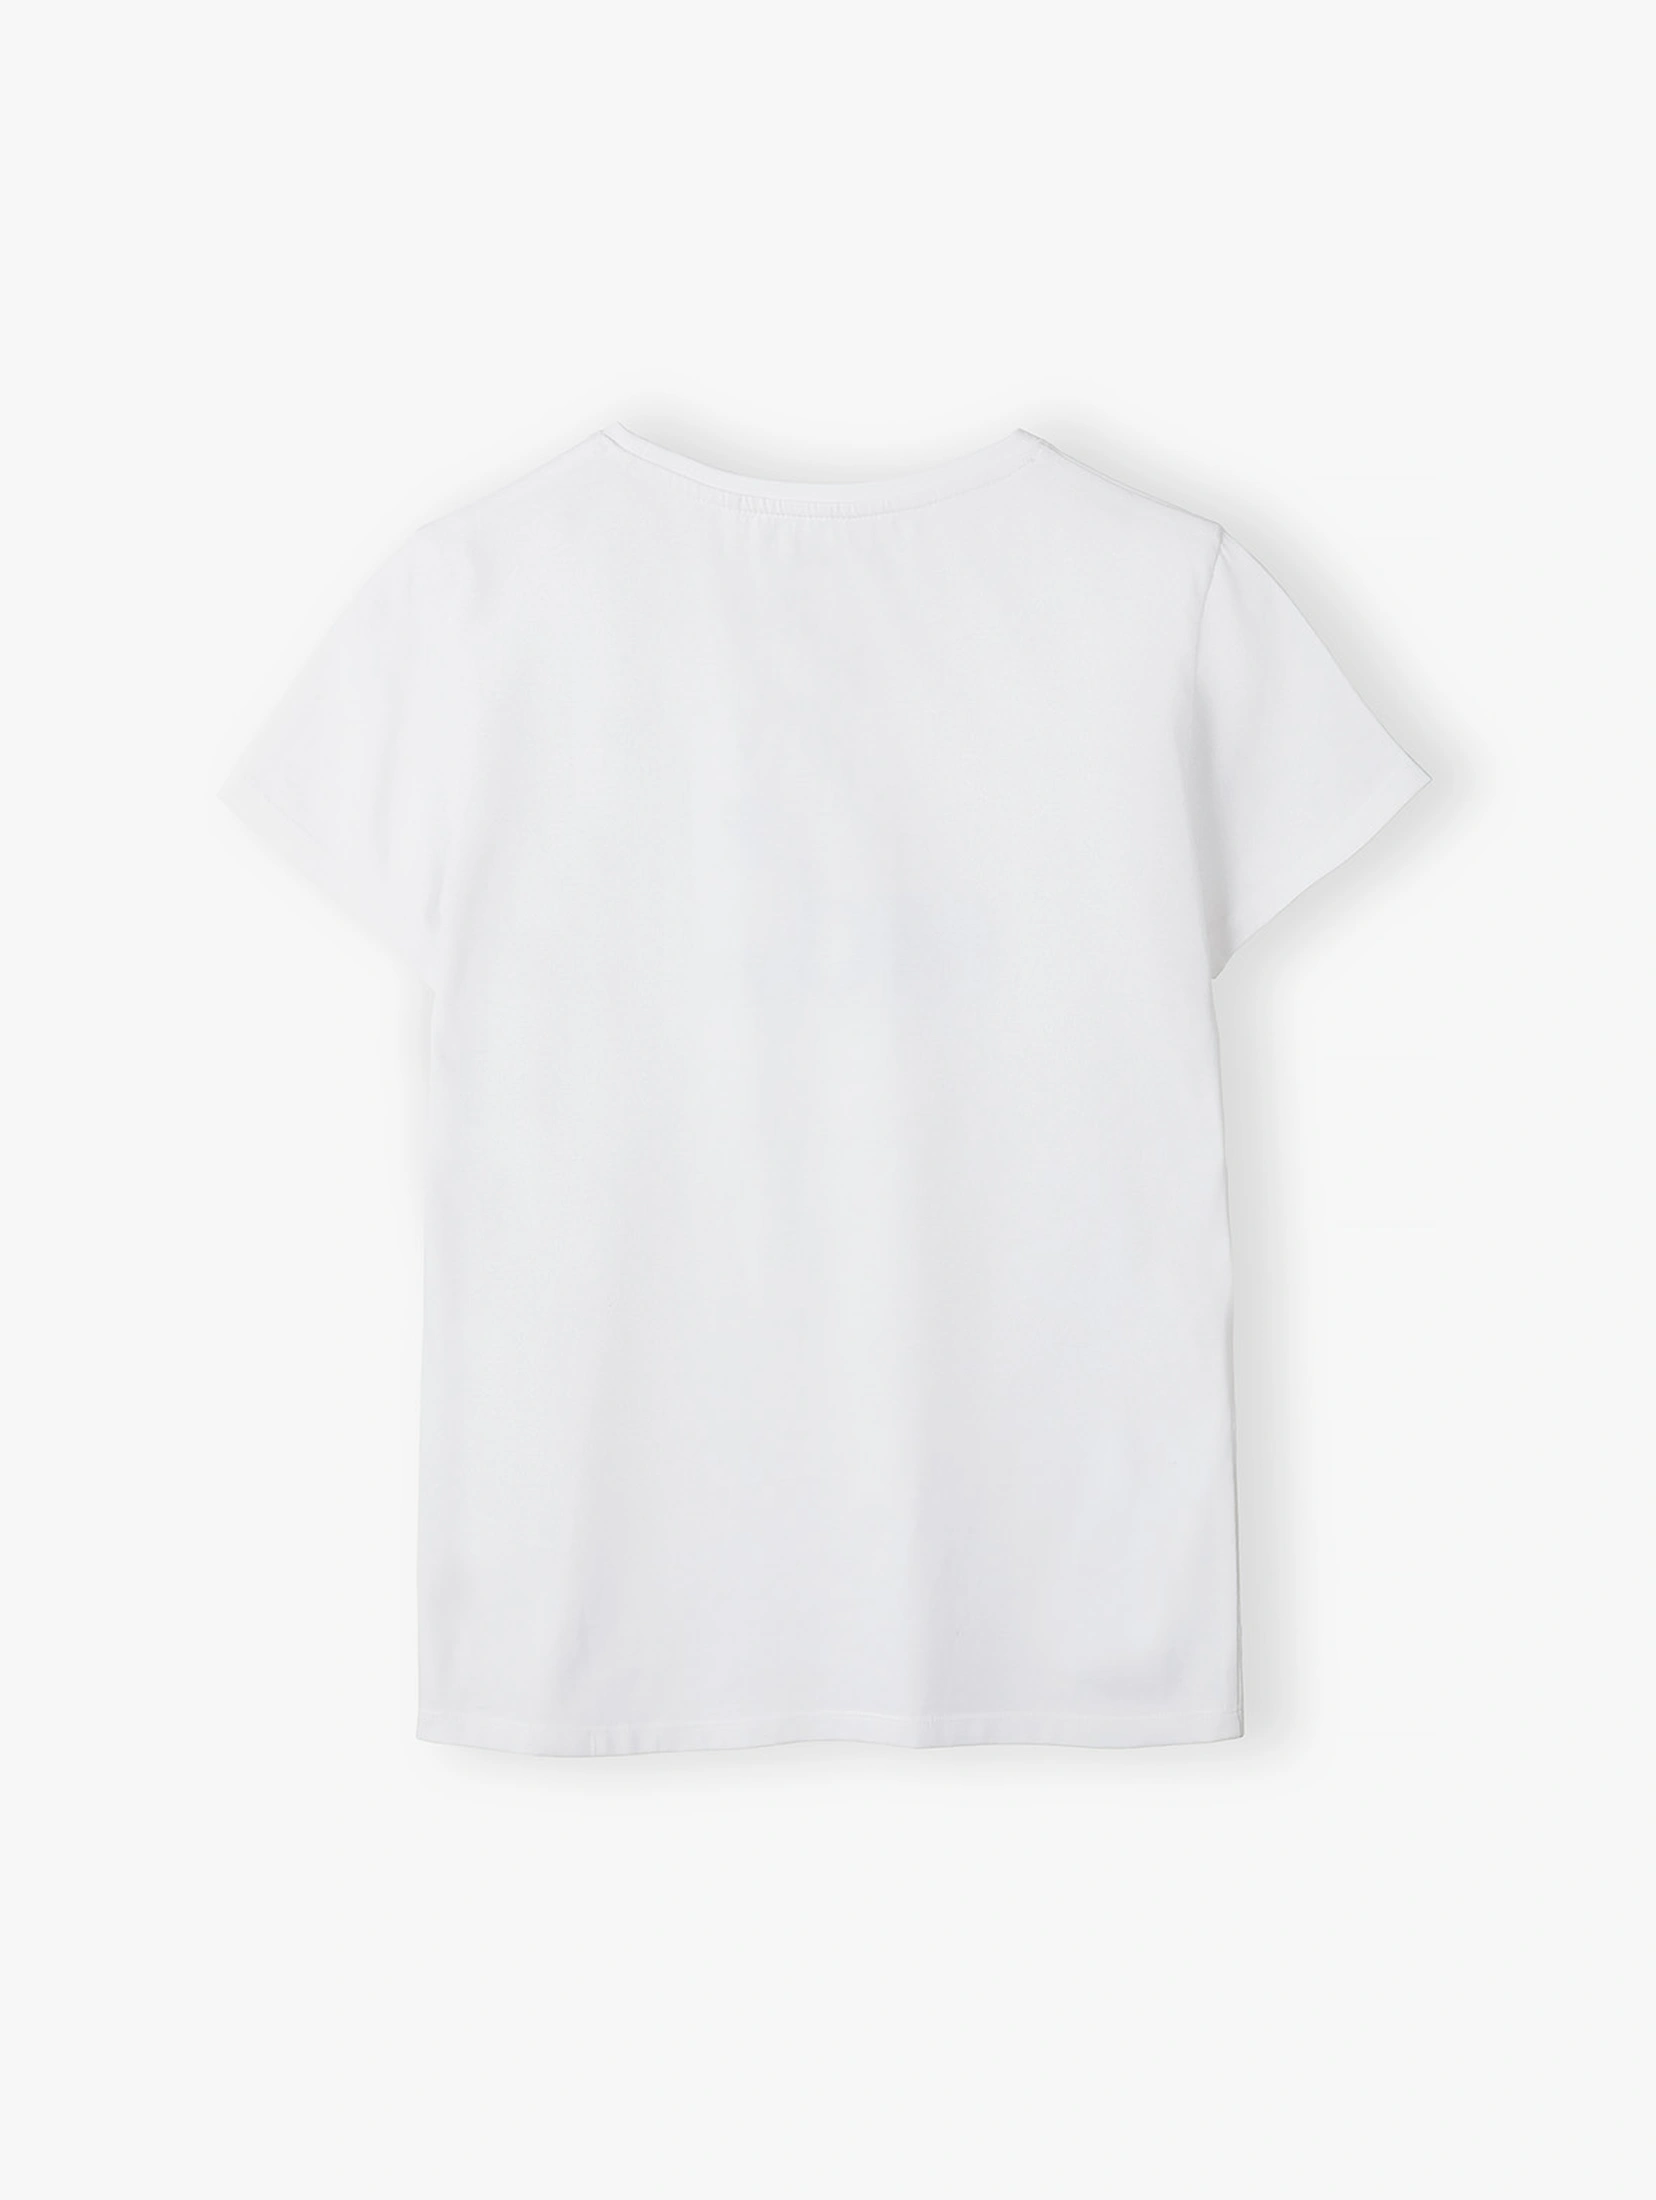 T-shirt damski biały z napisem - Mom